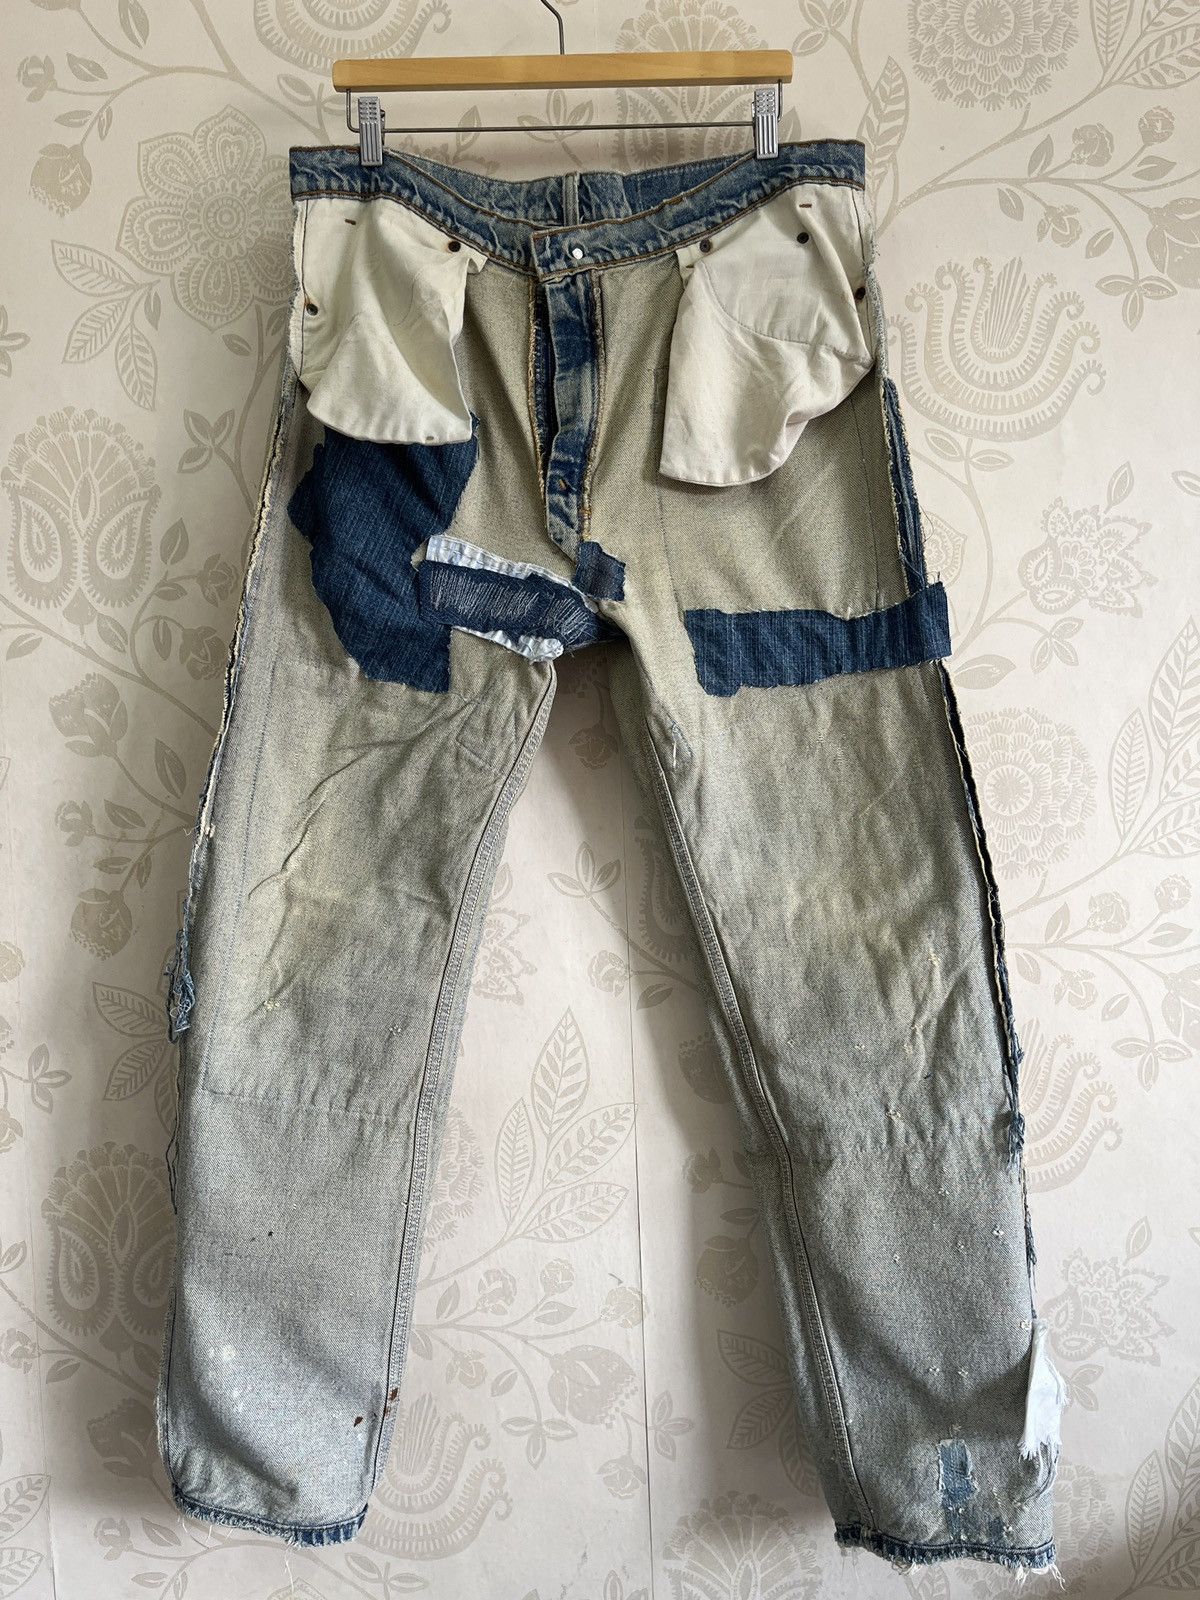 Grails Vintage Custom Matsuda Kapital Patches Japanese Jeans - 21